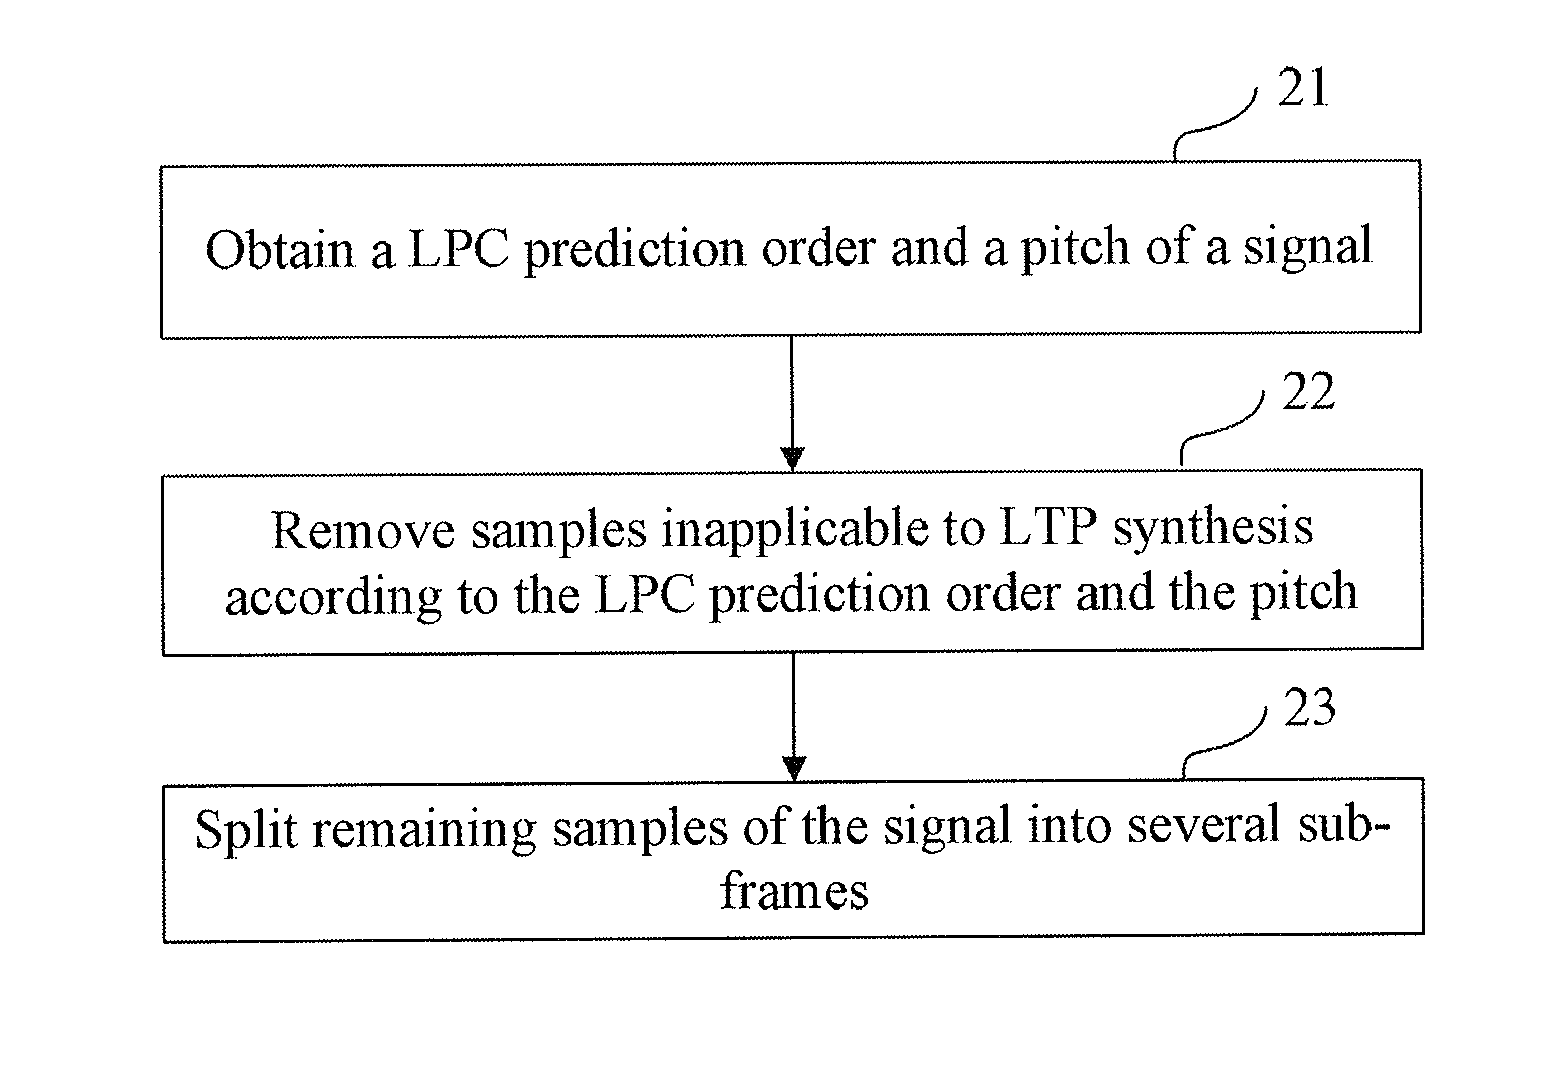 Framing method and apparatus